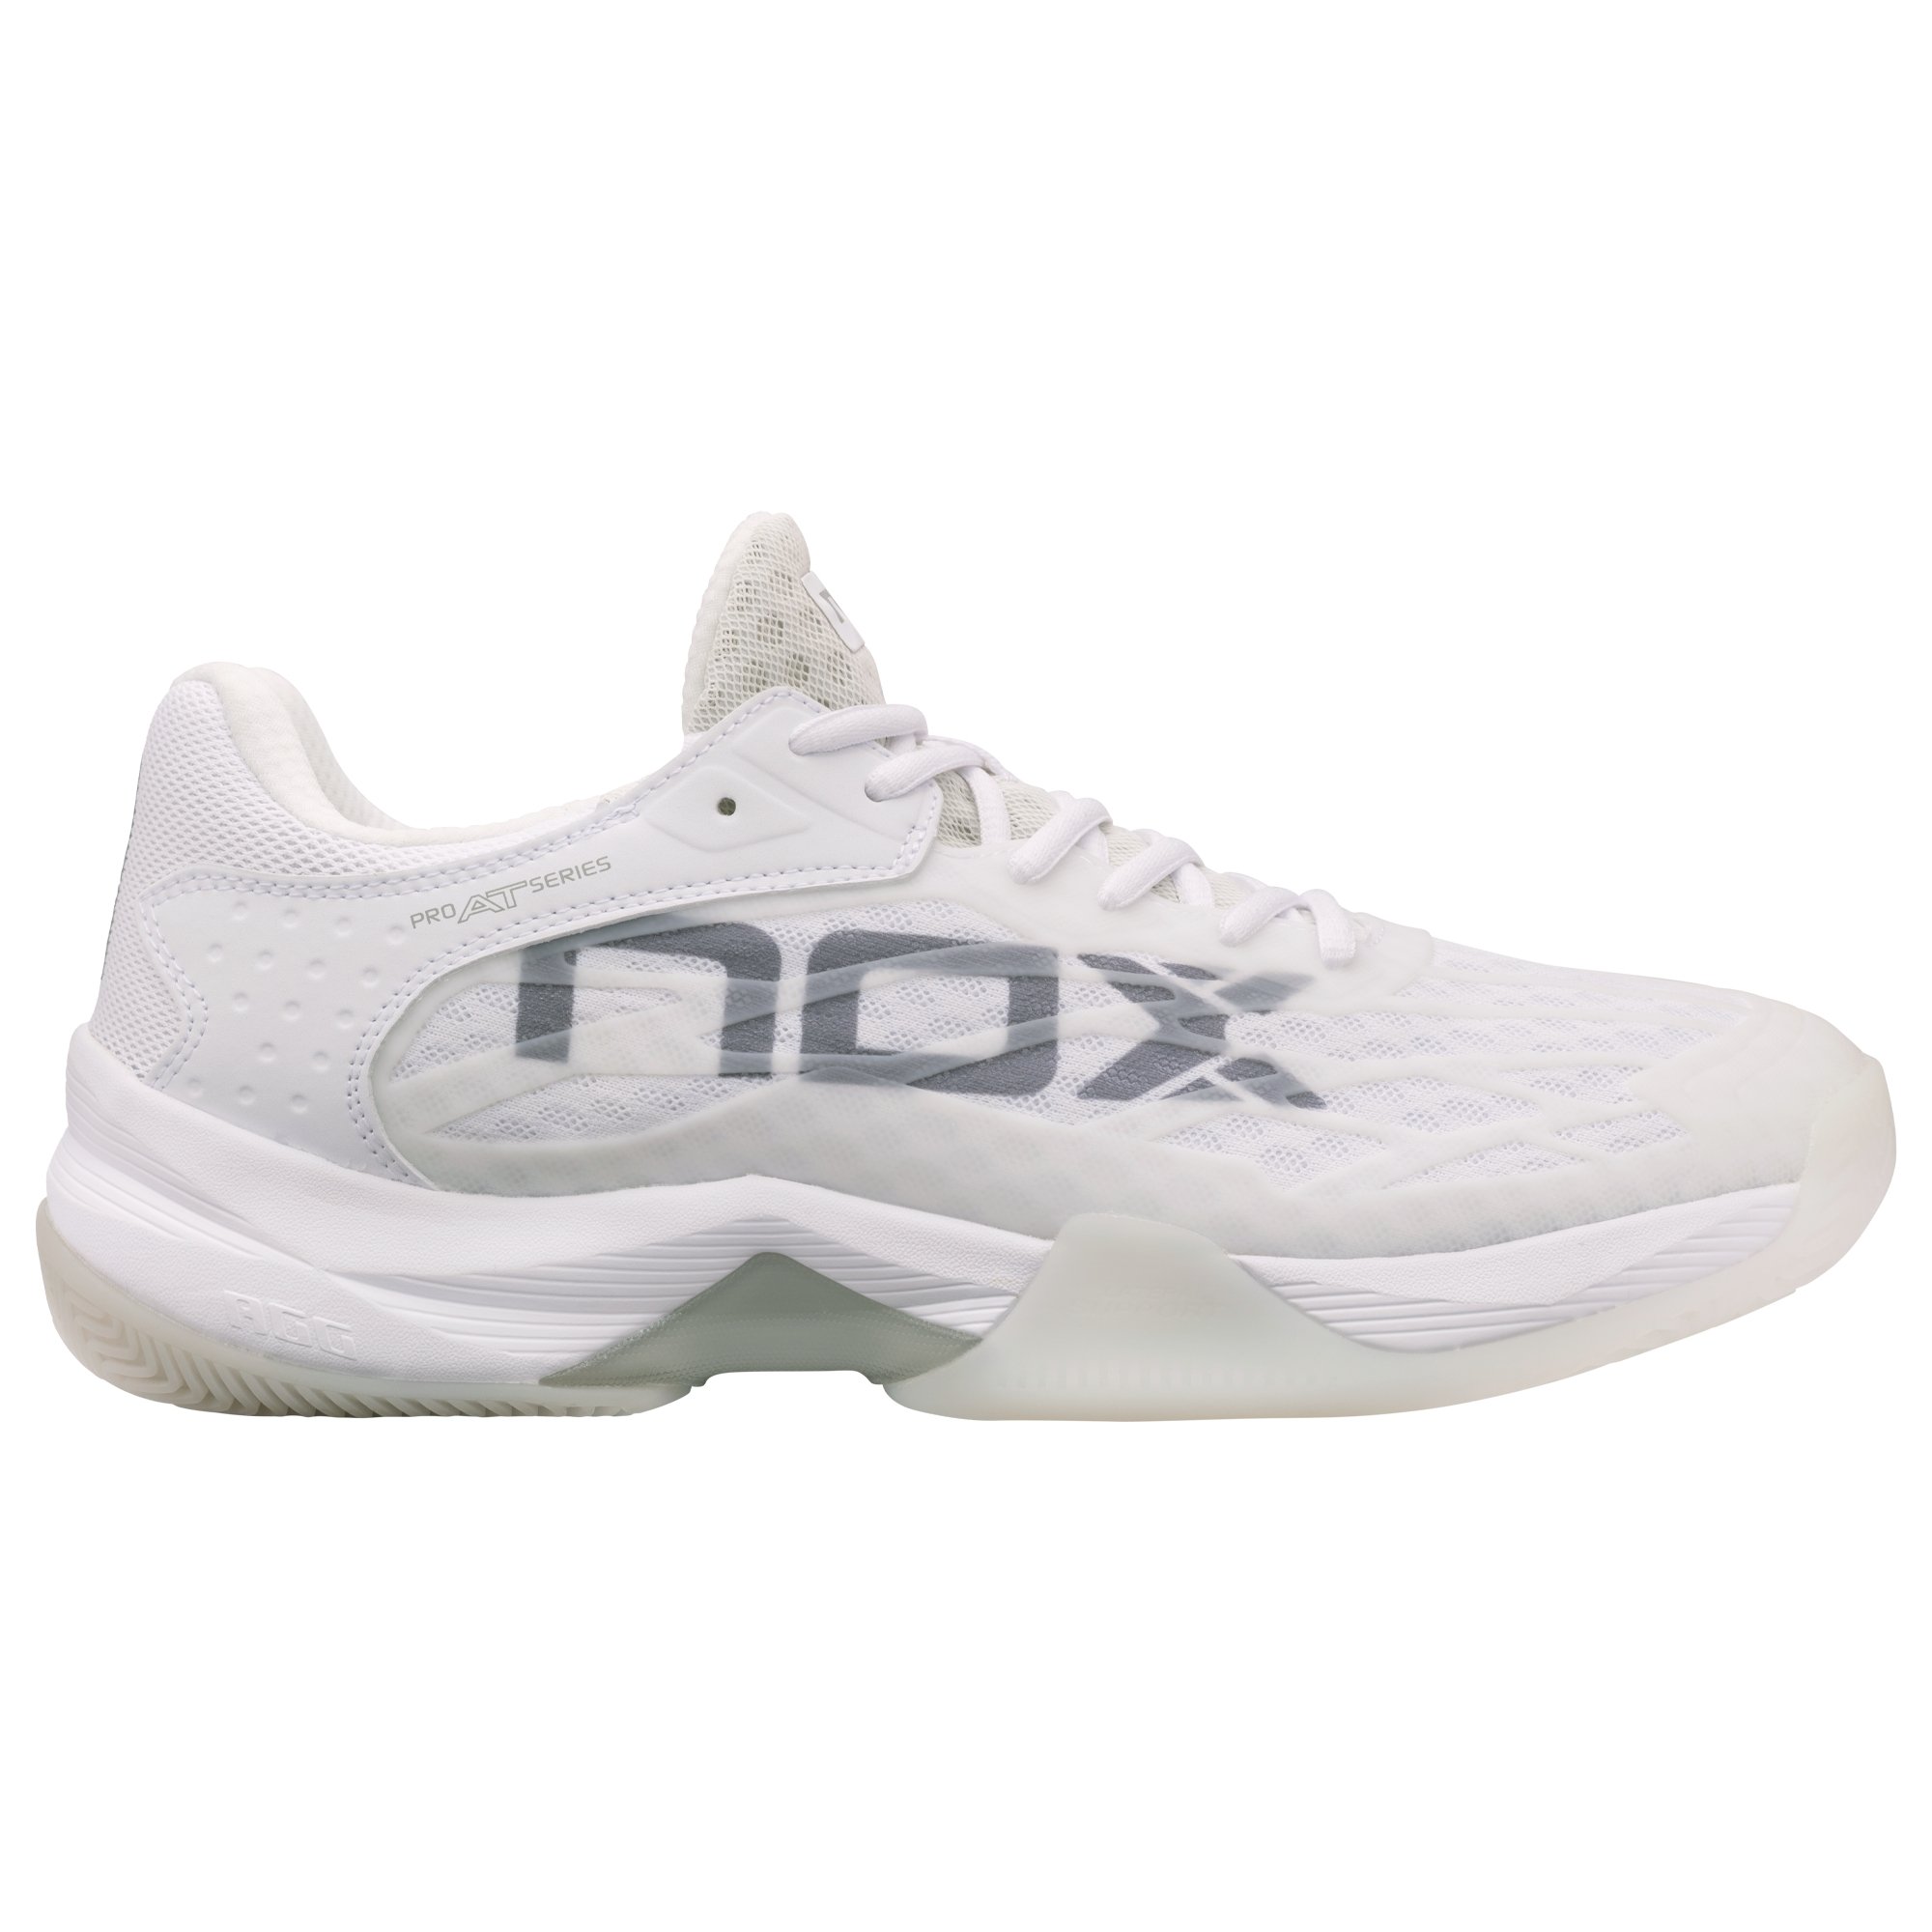 Sapatos Nox At10 Lux Calatluxblgr Brancos E Cinzentos - blanco-gris - 